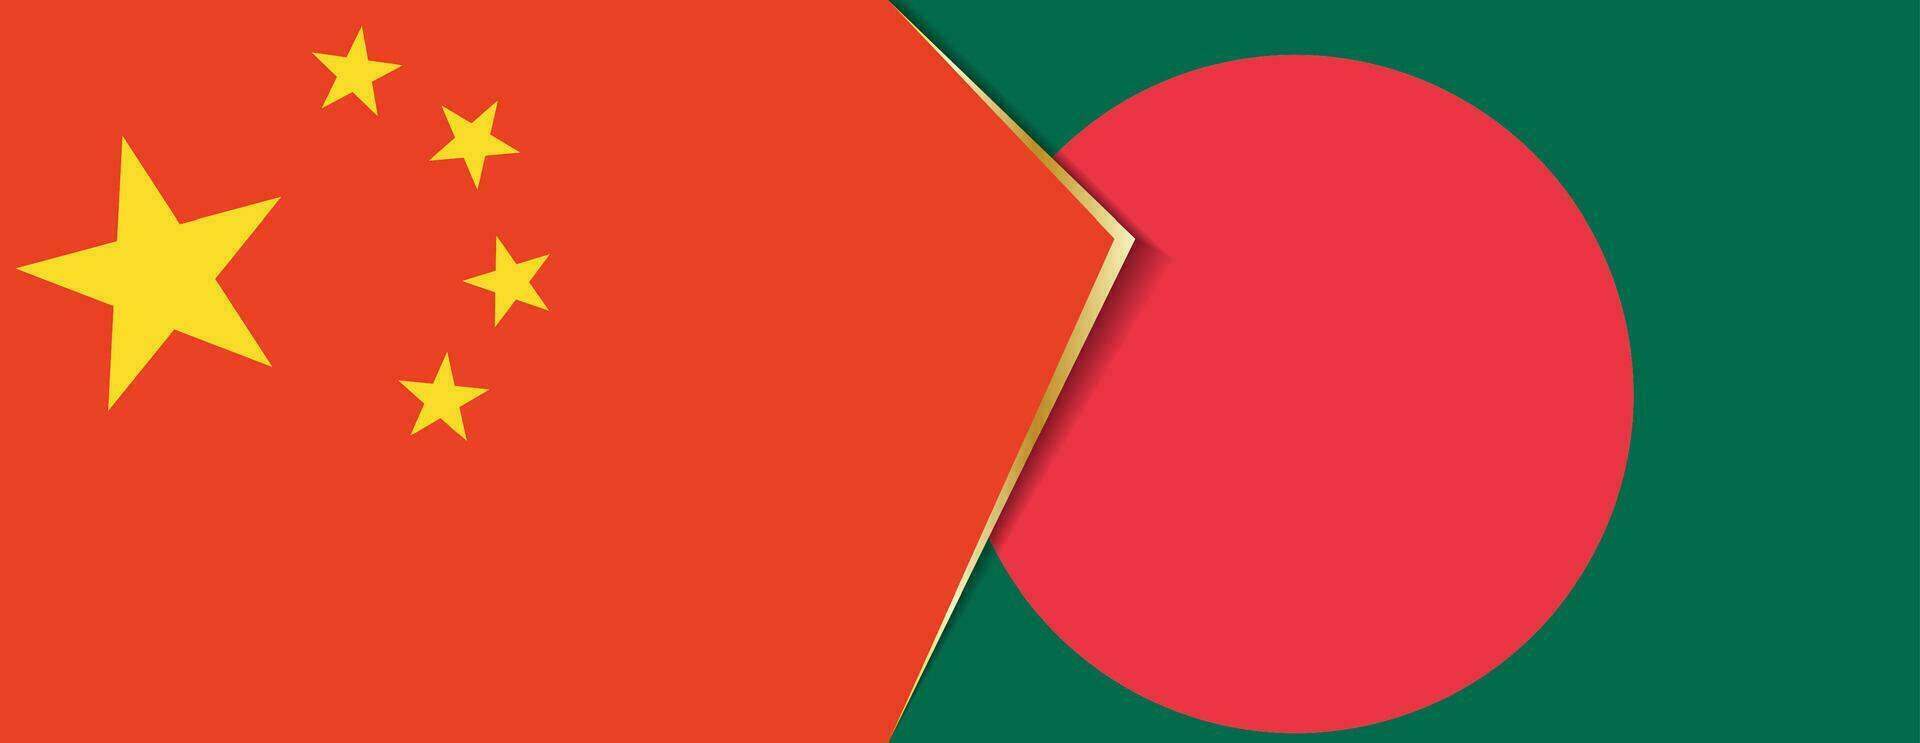 China und Bangladesch Flaggen, zwei Vektor Flaggen.